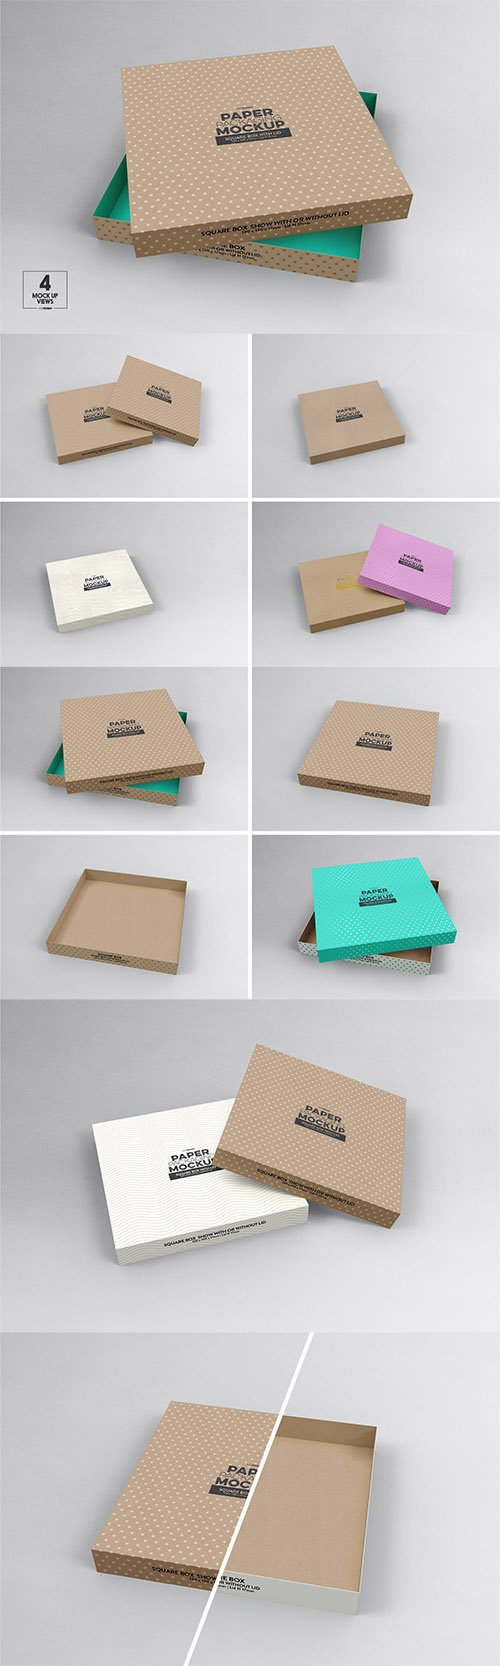 Medium Square Paper Box & Lid Mockup